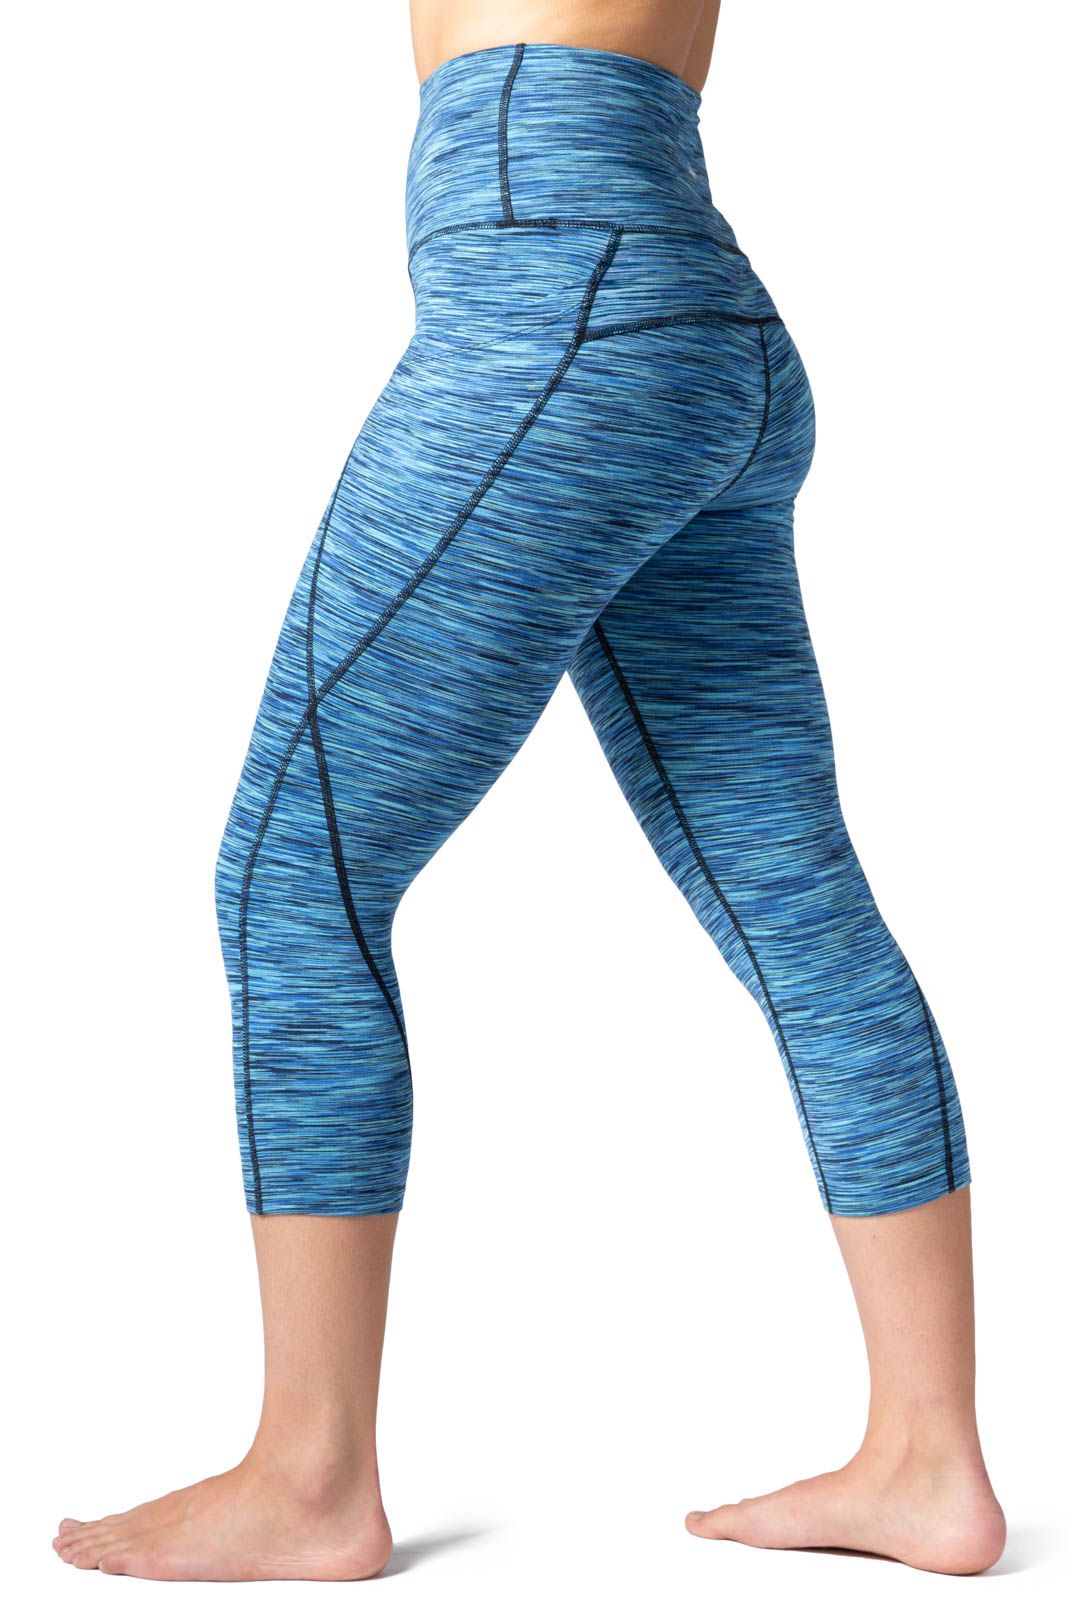 Daeful Ladies Capri Yoga Pants High Waist Plus Size Leggings Workout Skinny  Capris Length Faux Denim Pant Blue XL